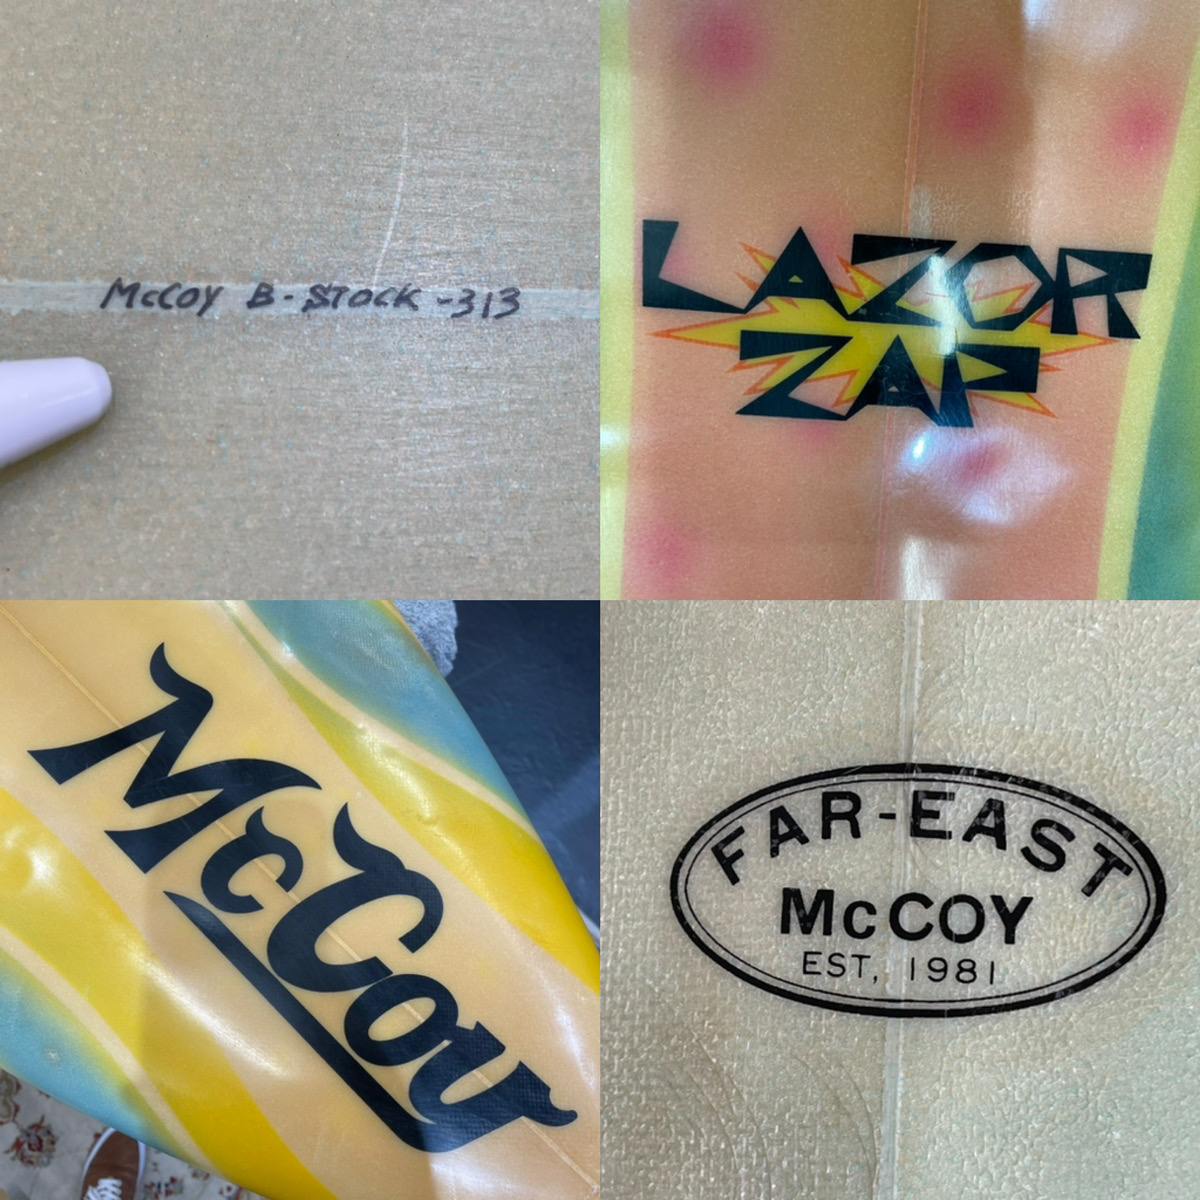 McCOY / LAZOR ZAP 5`9 TWIN